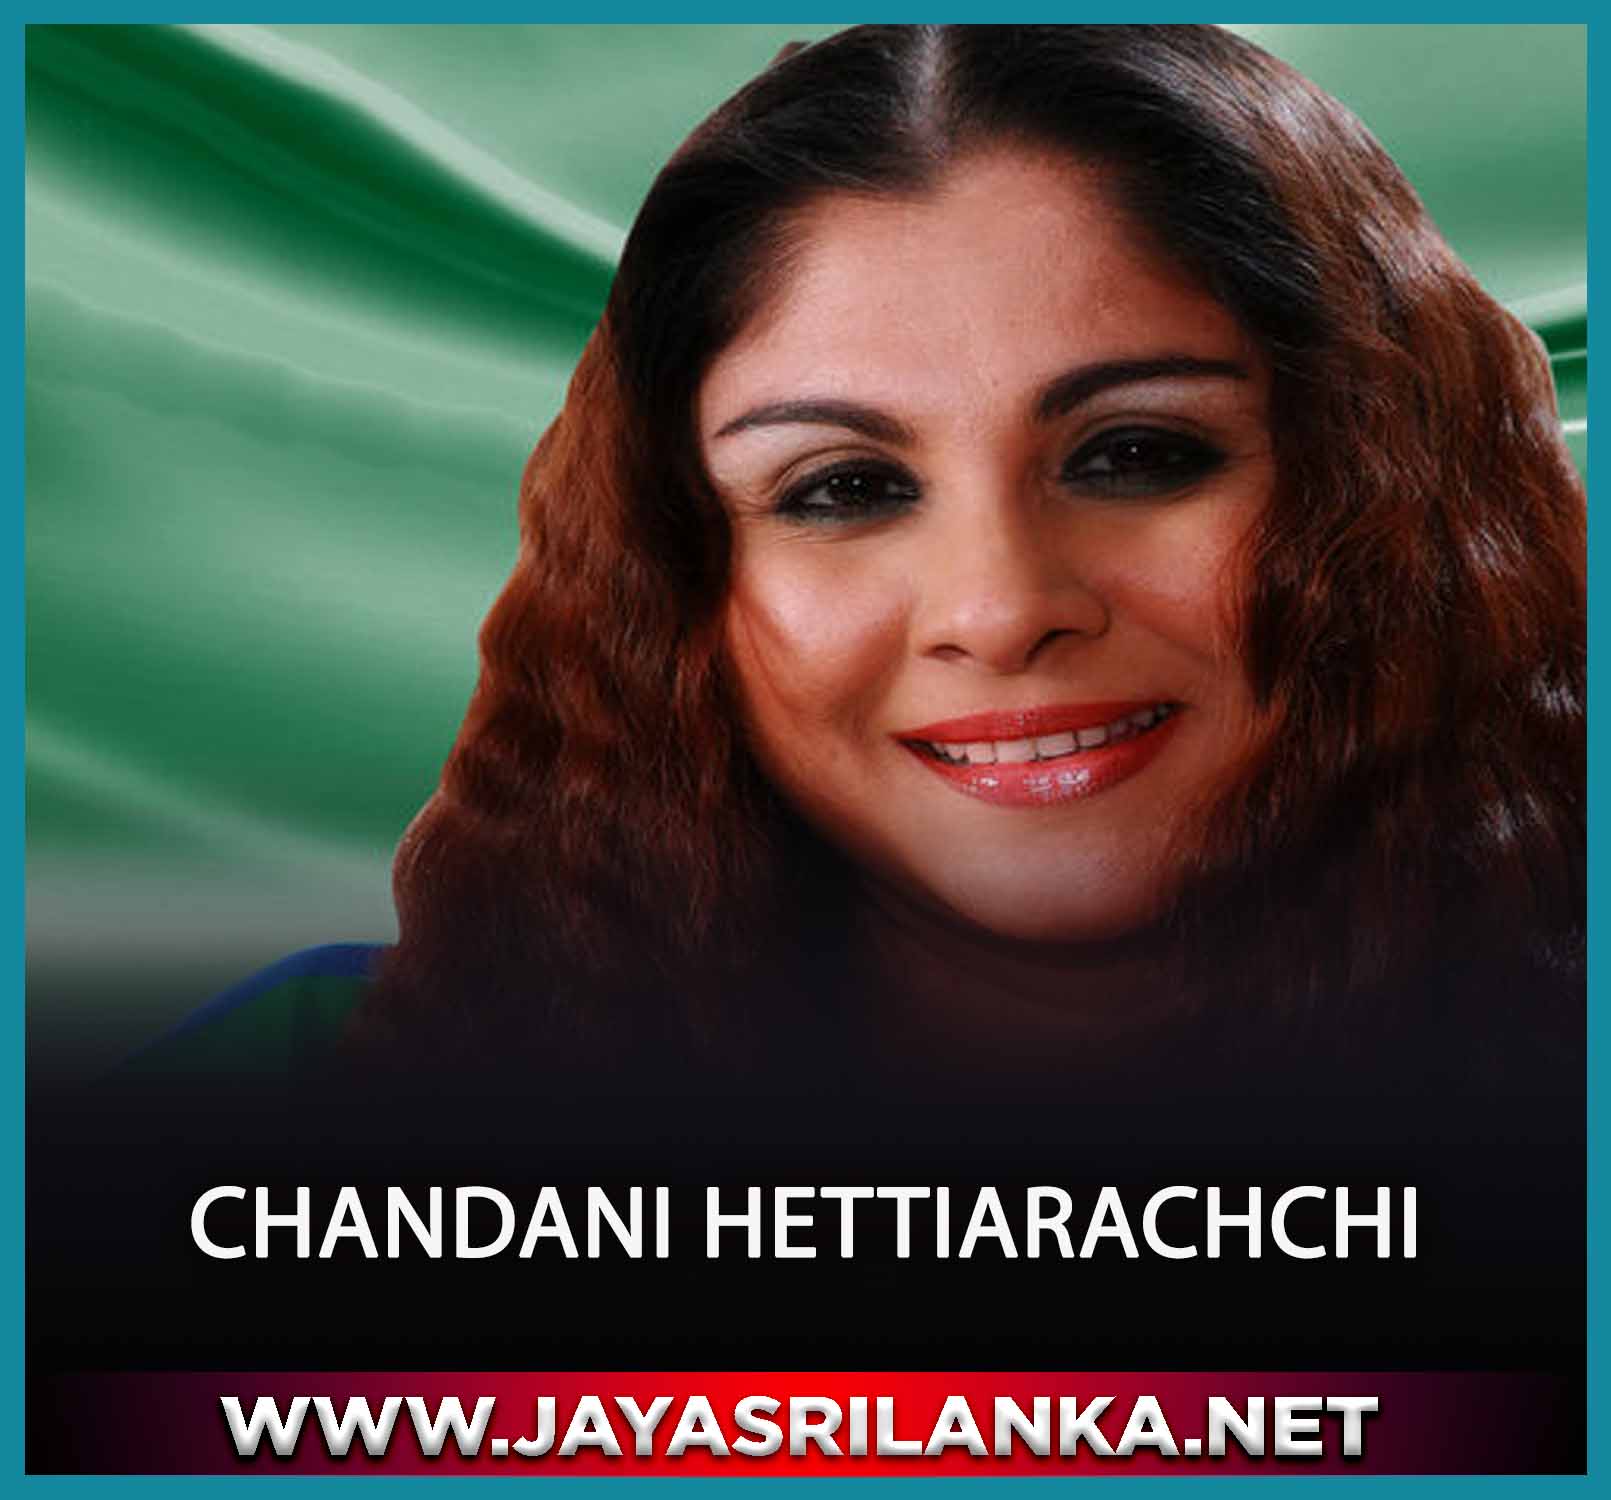 Lassana Siri Lanka - Chandani Hettiarachchi mp3 Image